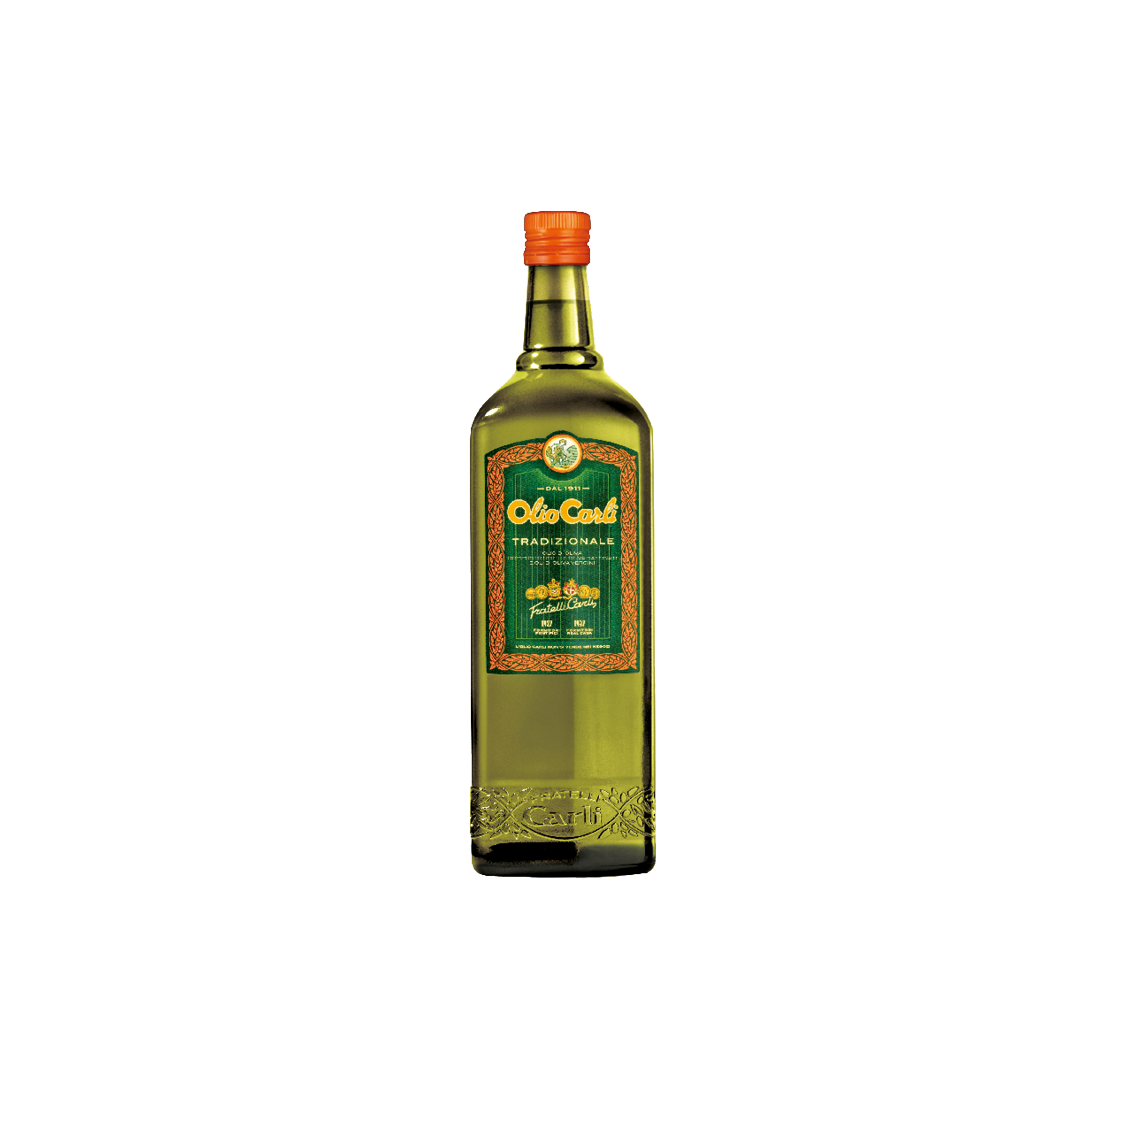 Olivenöl* Flasche Tradizionale